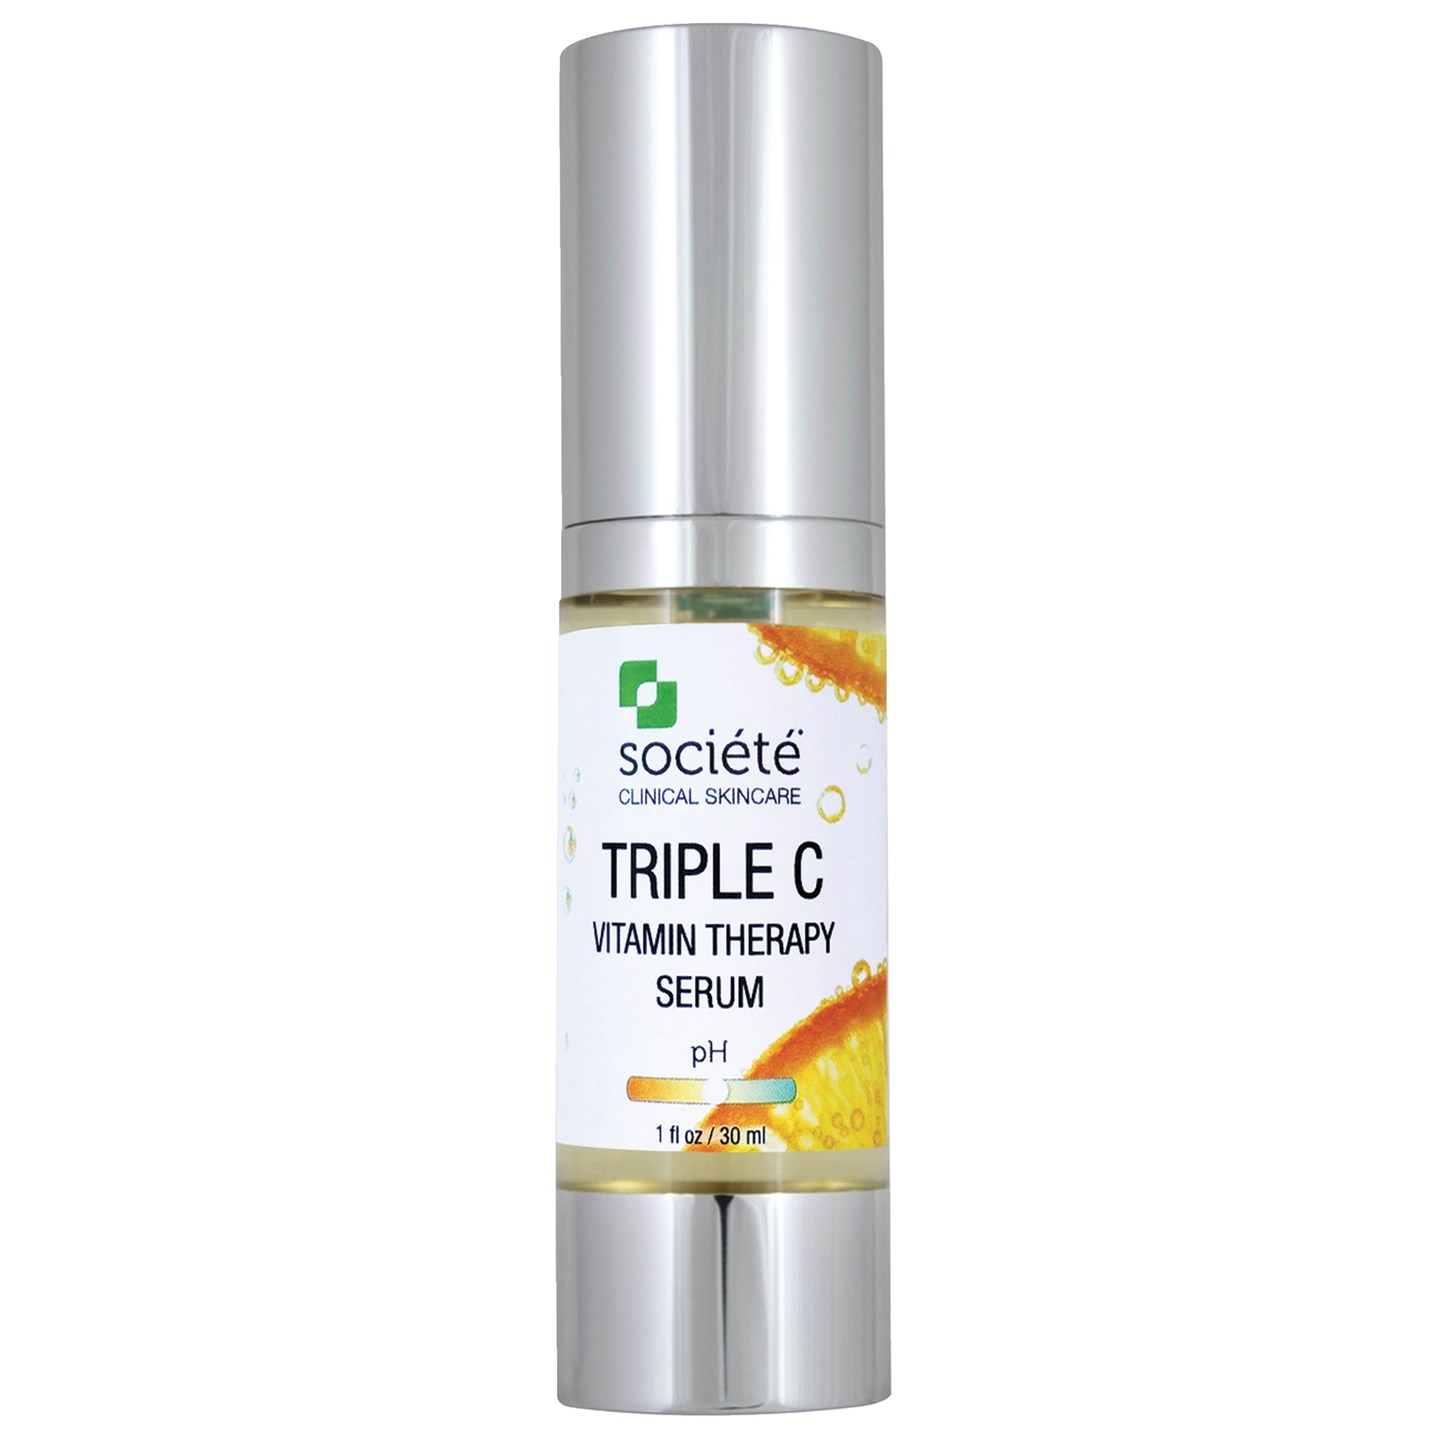 Société Triple C Vitamin Therapy Serum